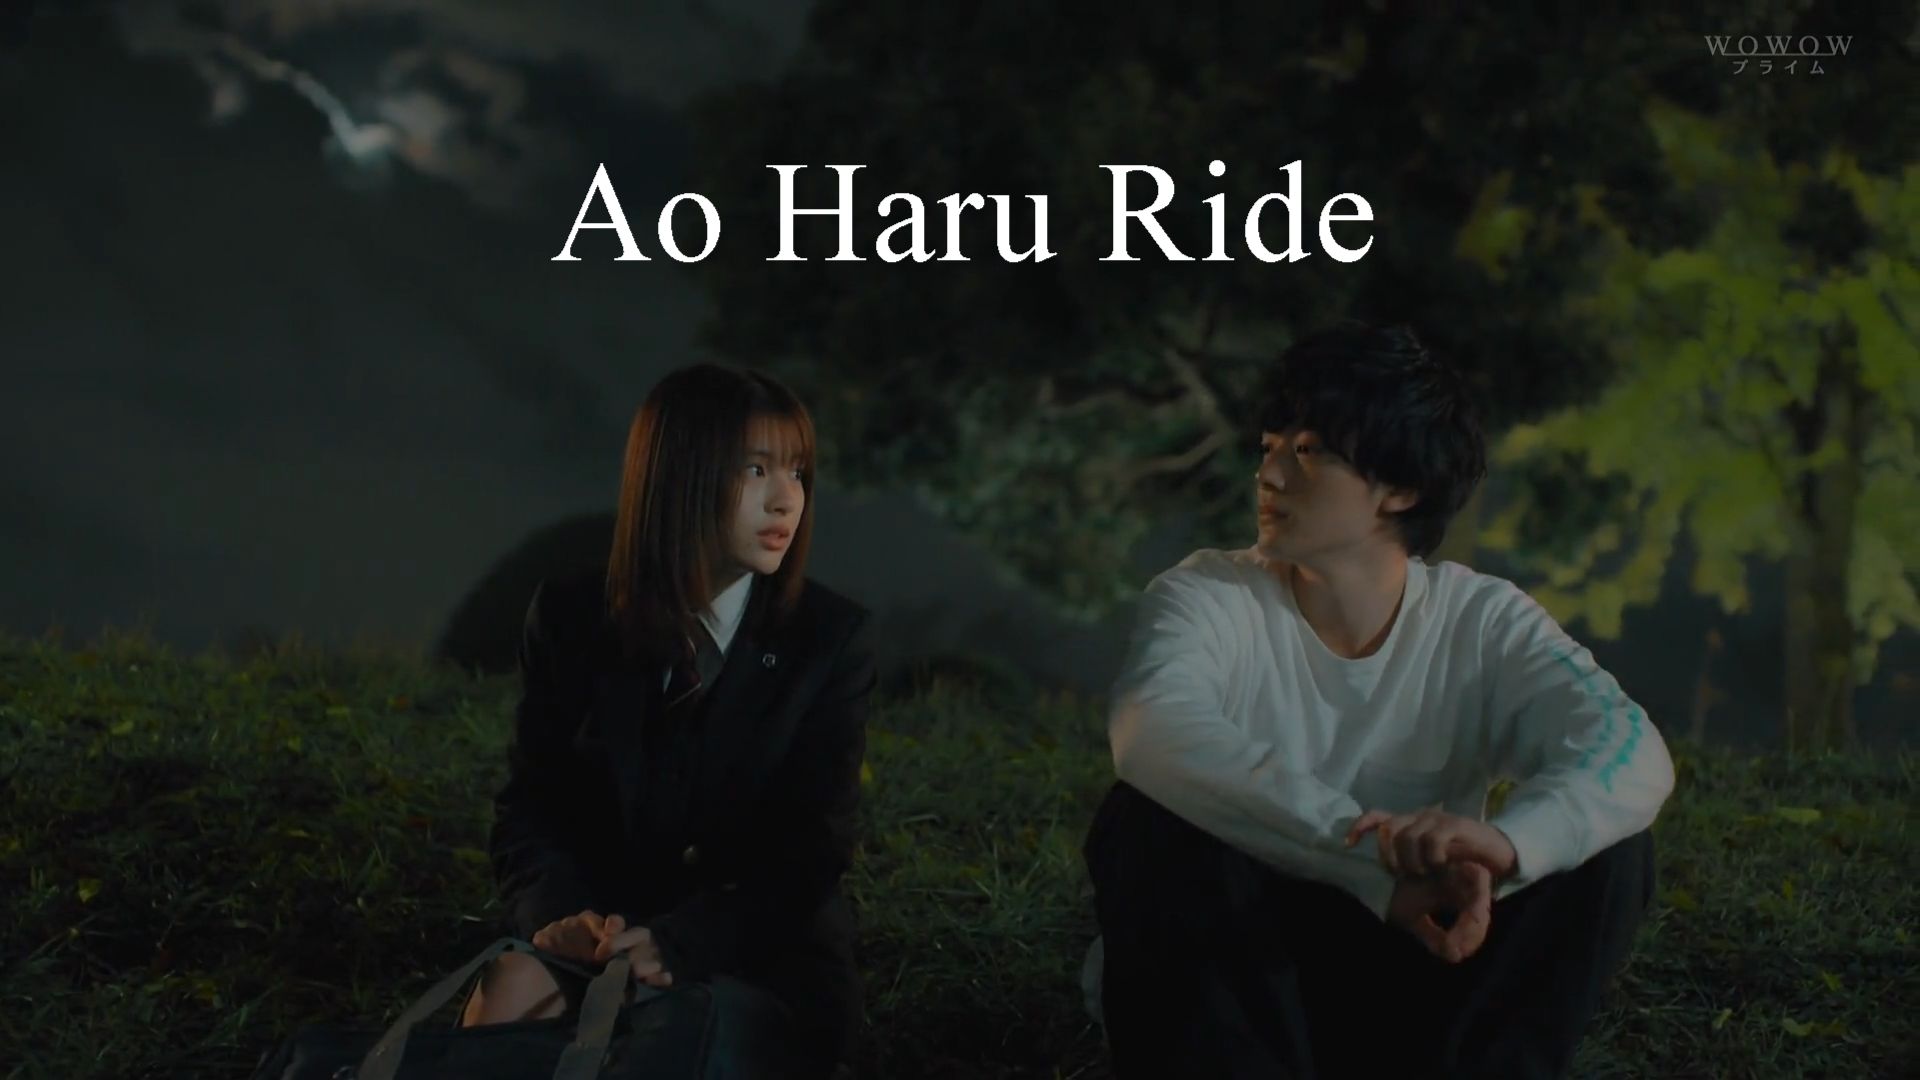 Page.4 - Ao Haru Ride (Season 1, Episode 4) - Apple TV